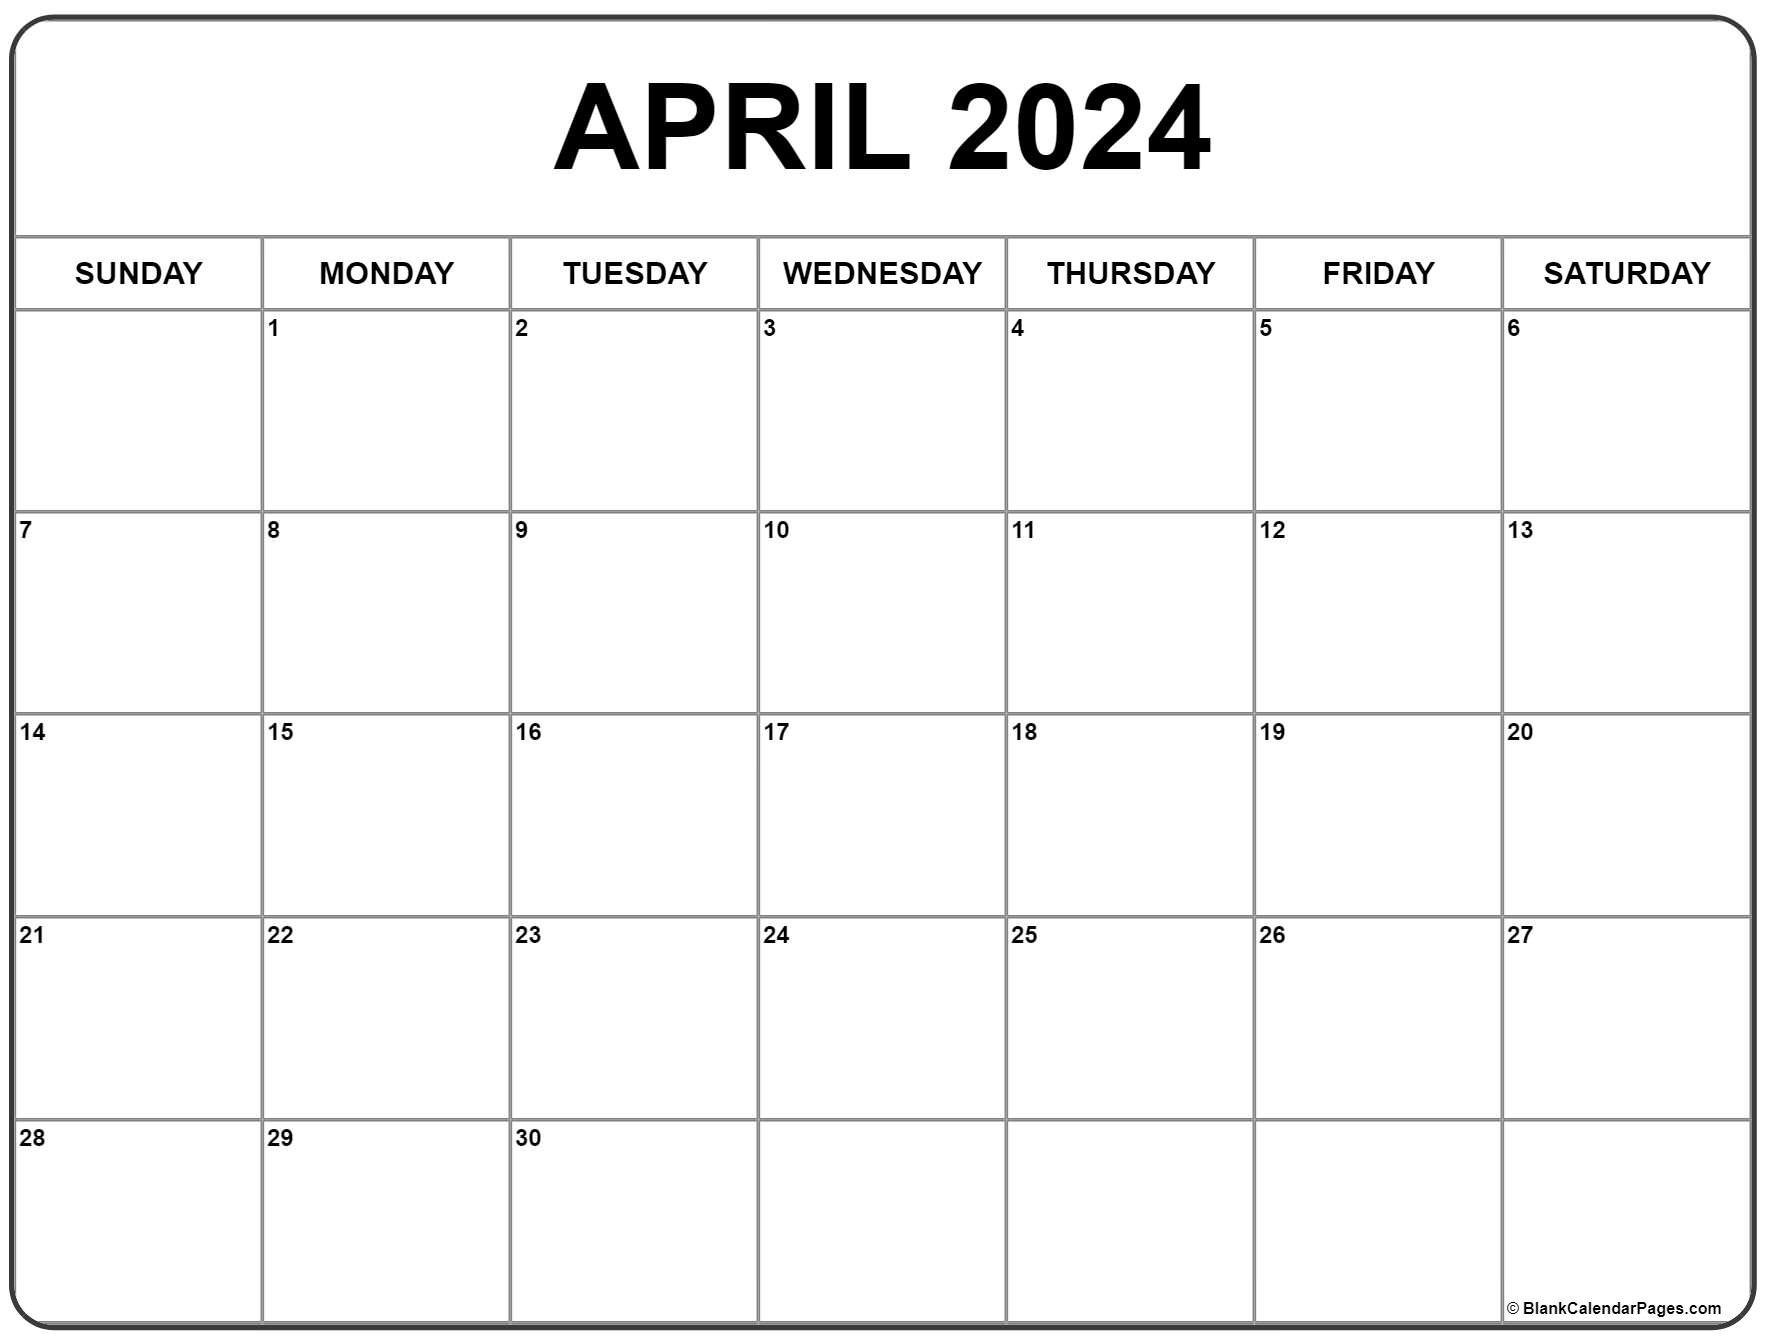 April 2024 Calendar | Free Printable Calendar in April 2024 Calendar Template